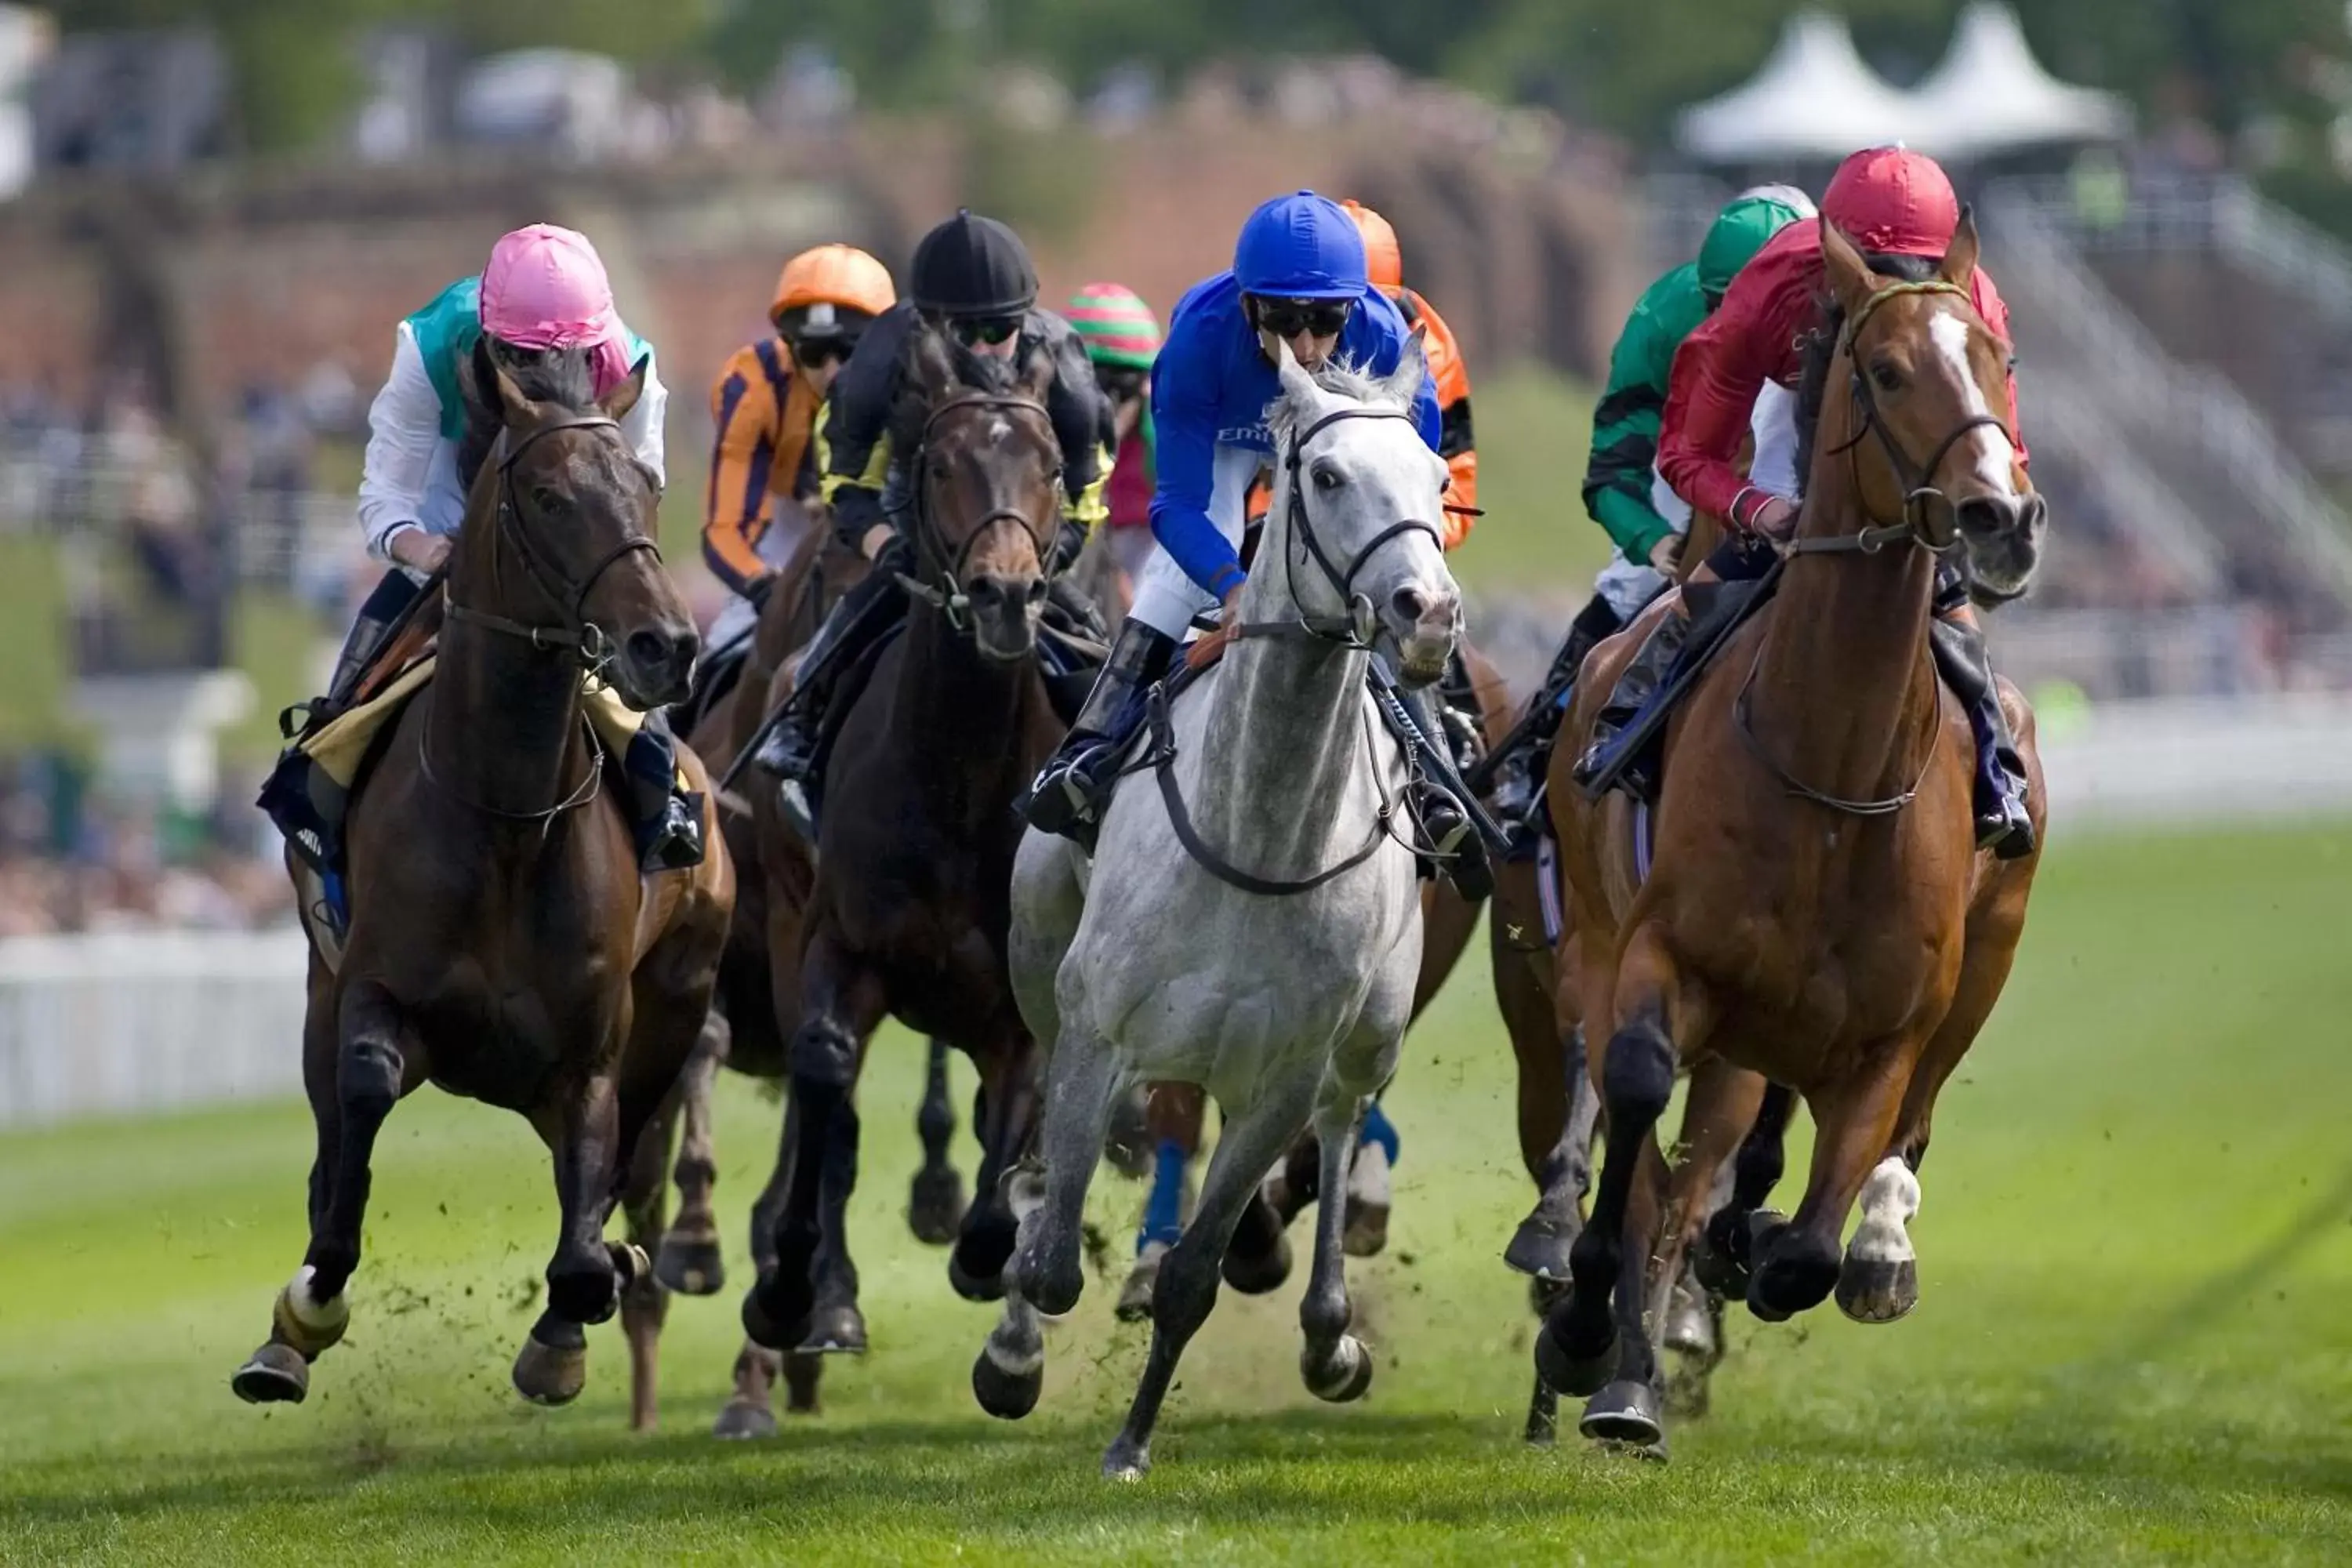 Area and facilities, Horseback Riding in Holiday Inn Express Chester Racecourse